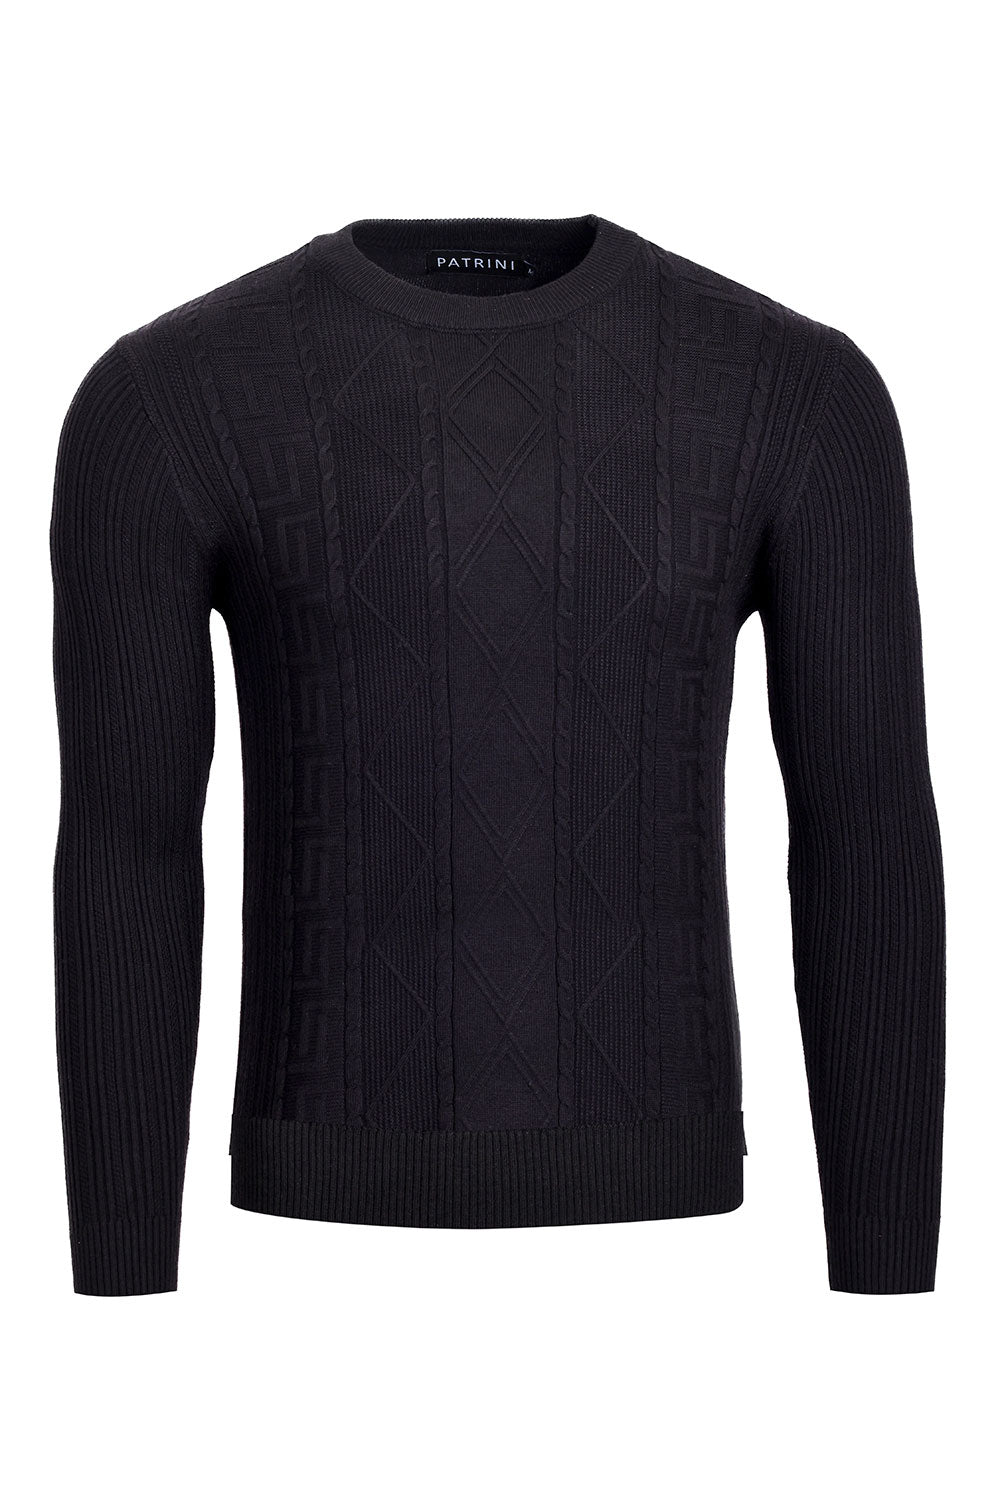 Barabas Men's Greek Key Knitted Stretch Crew Neck Sweaters 3PLS02 Black